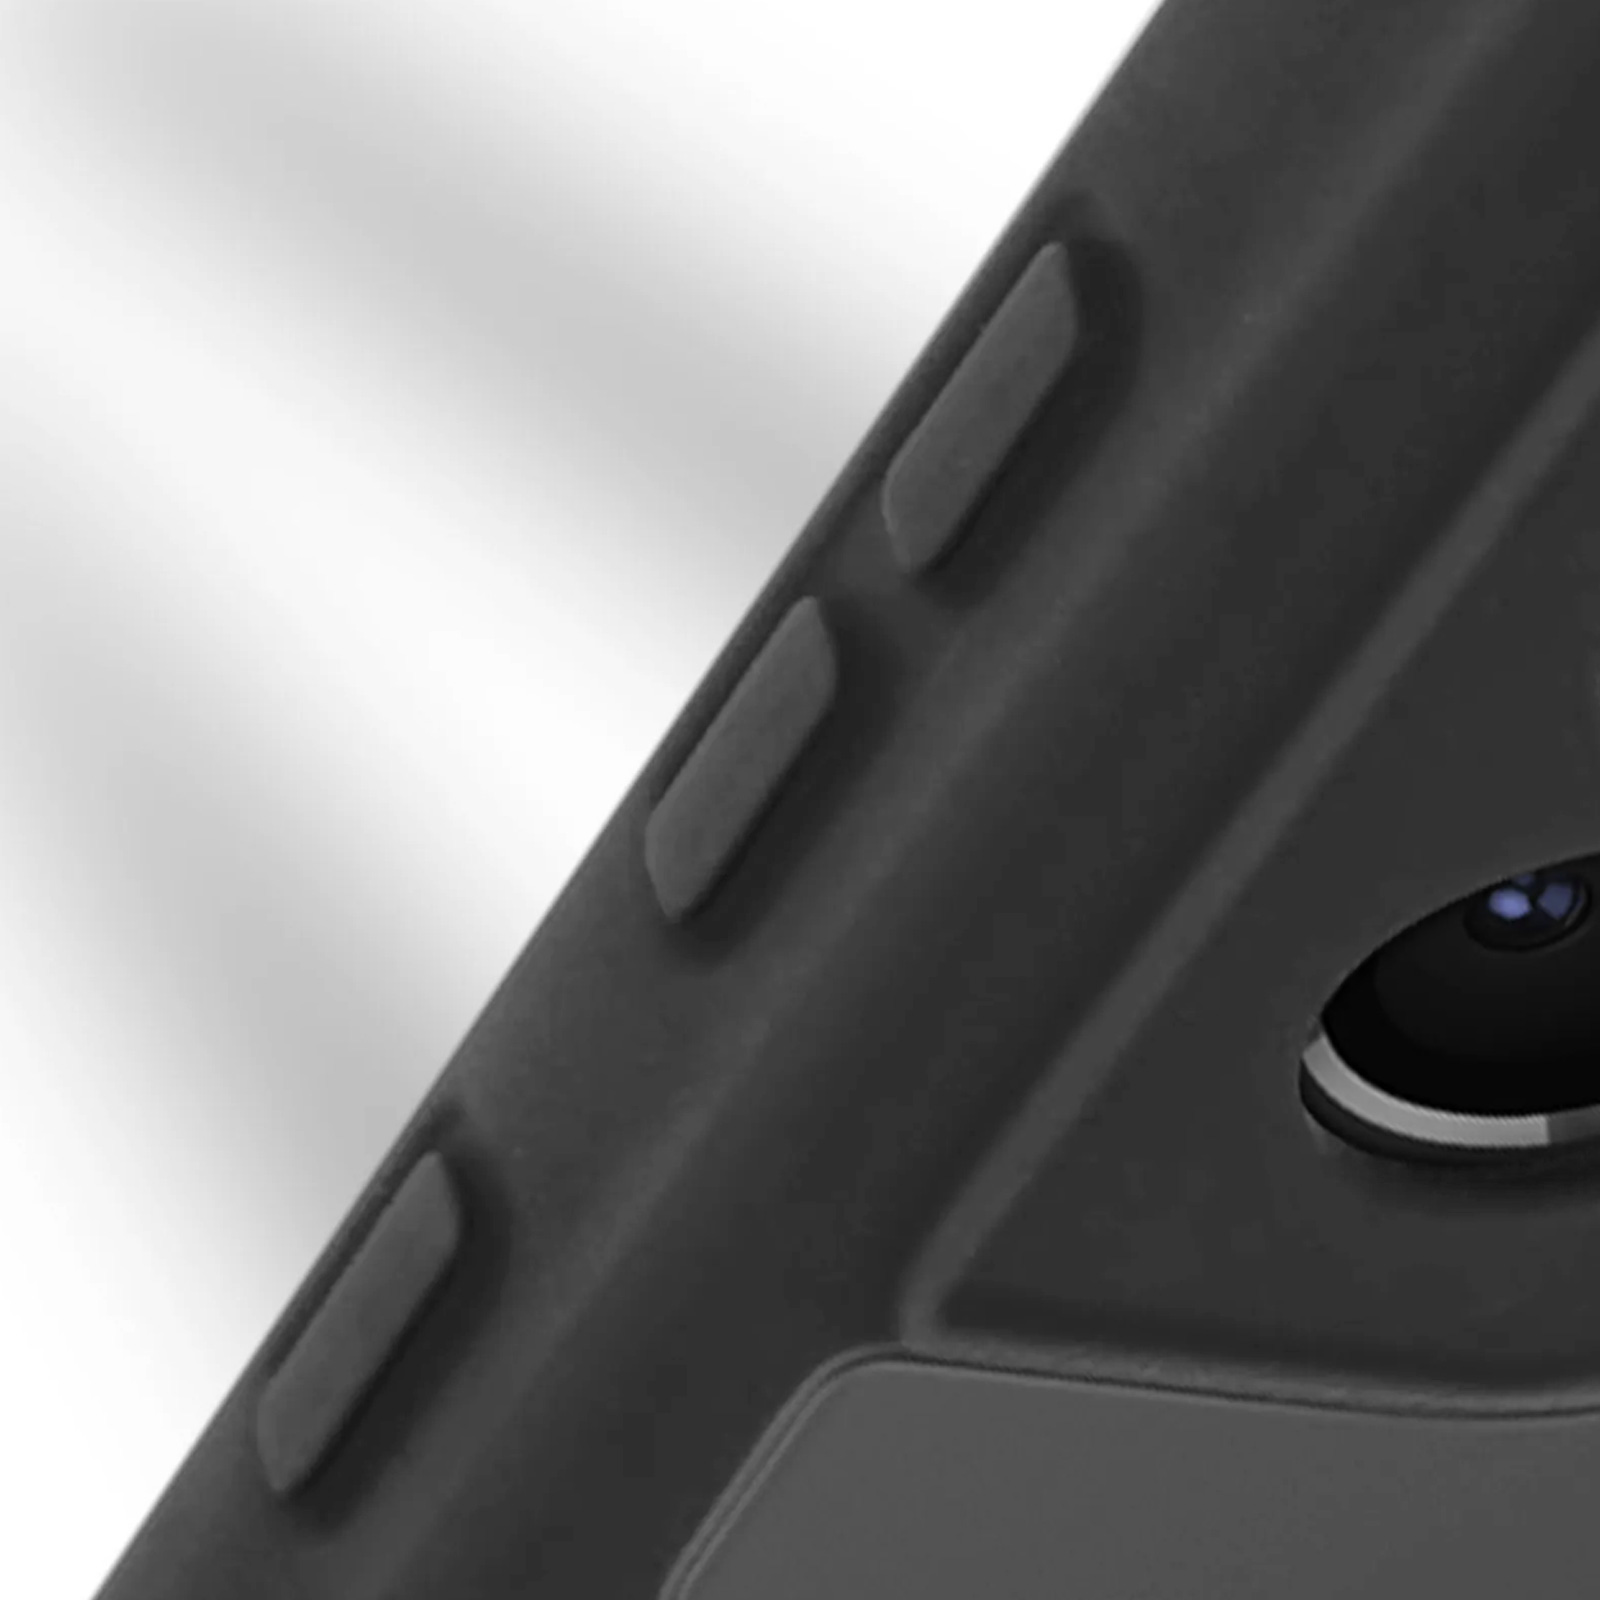 Carcasa antigolpes para iPhone 12 Pro Max